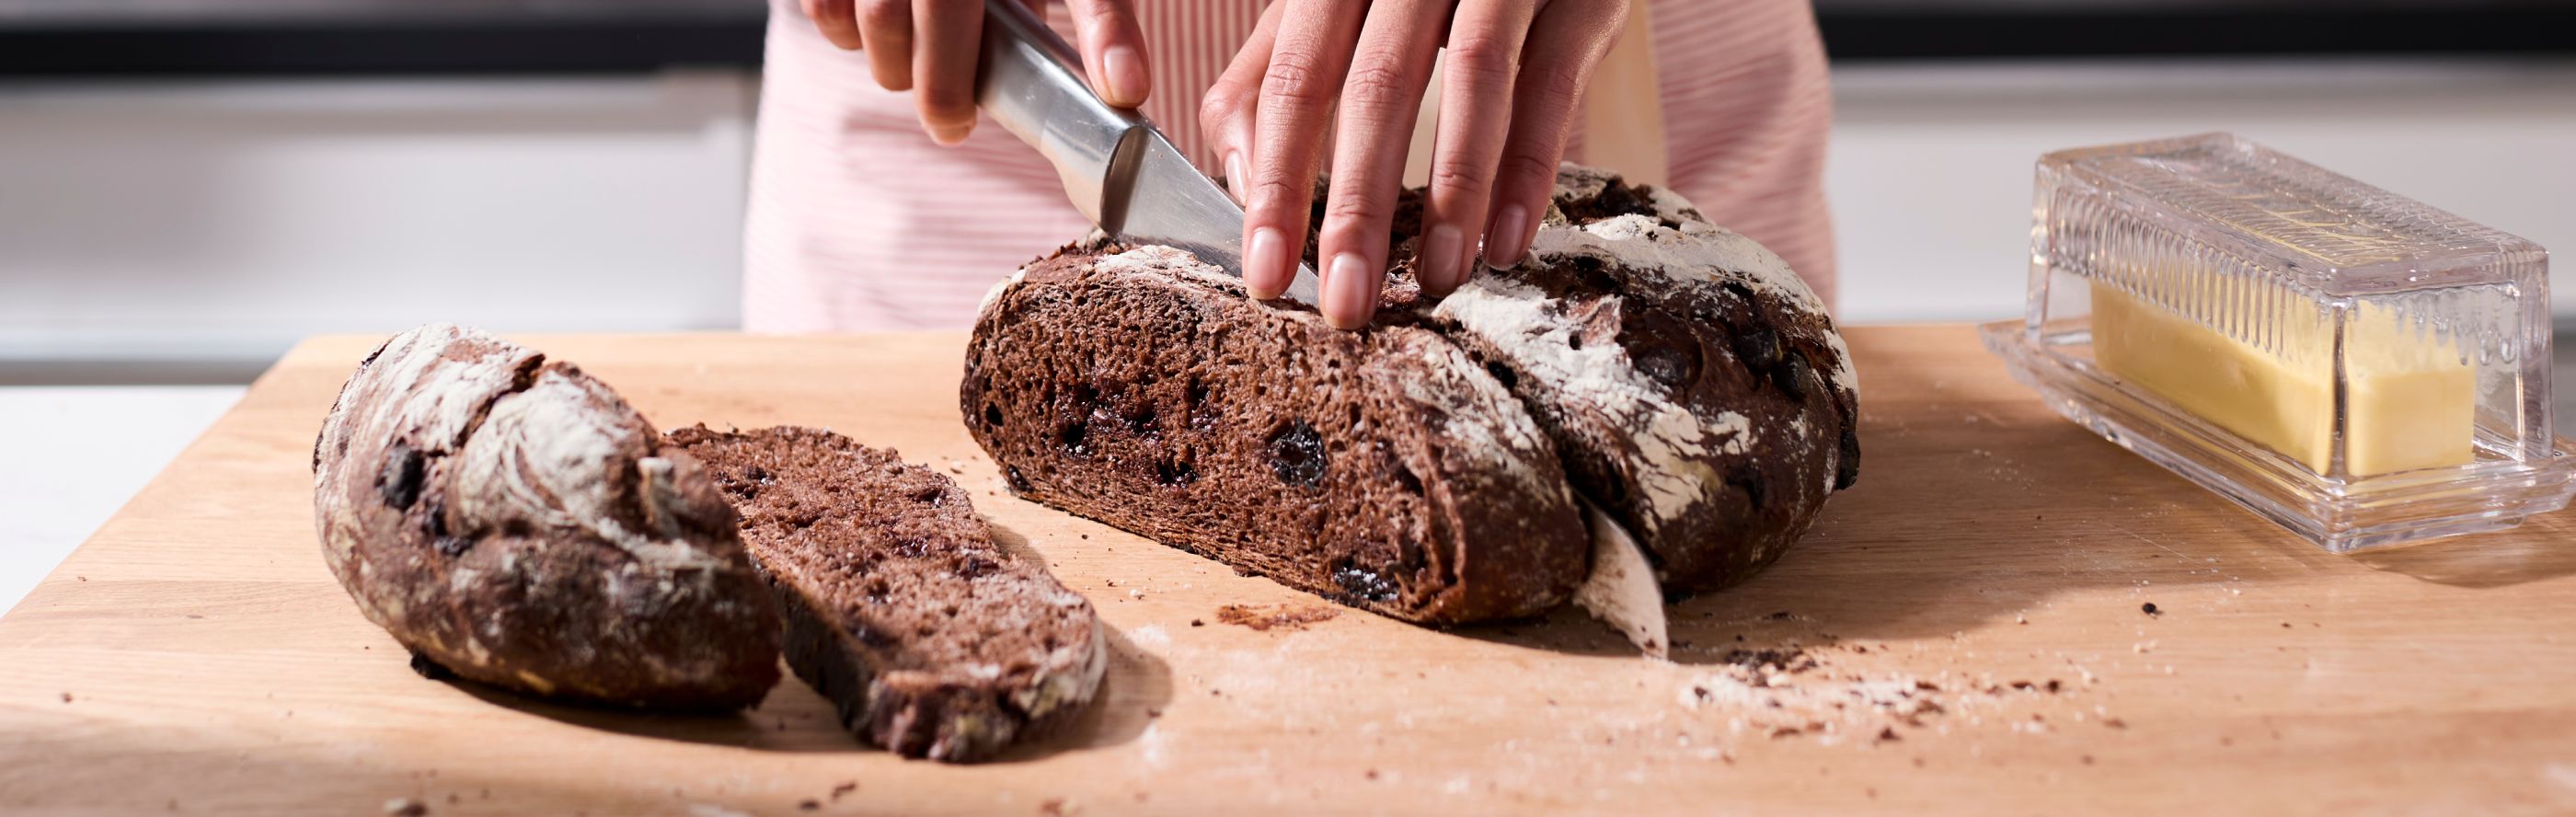 Person slicing dark brown bread